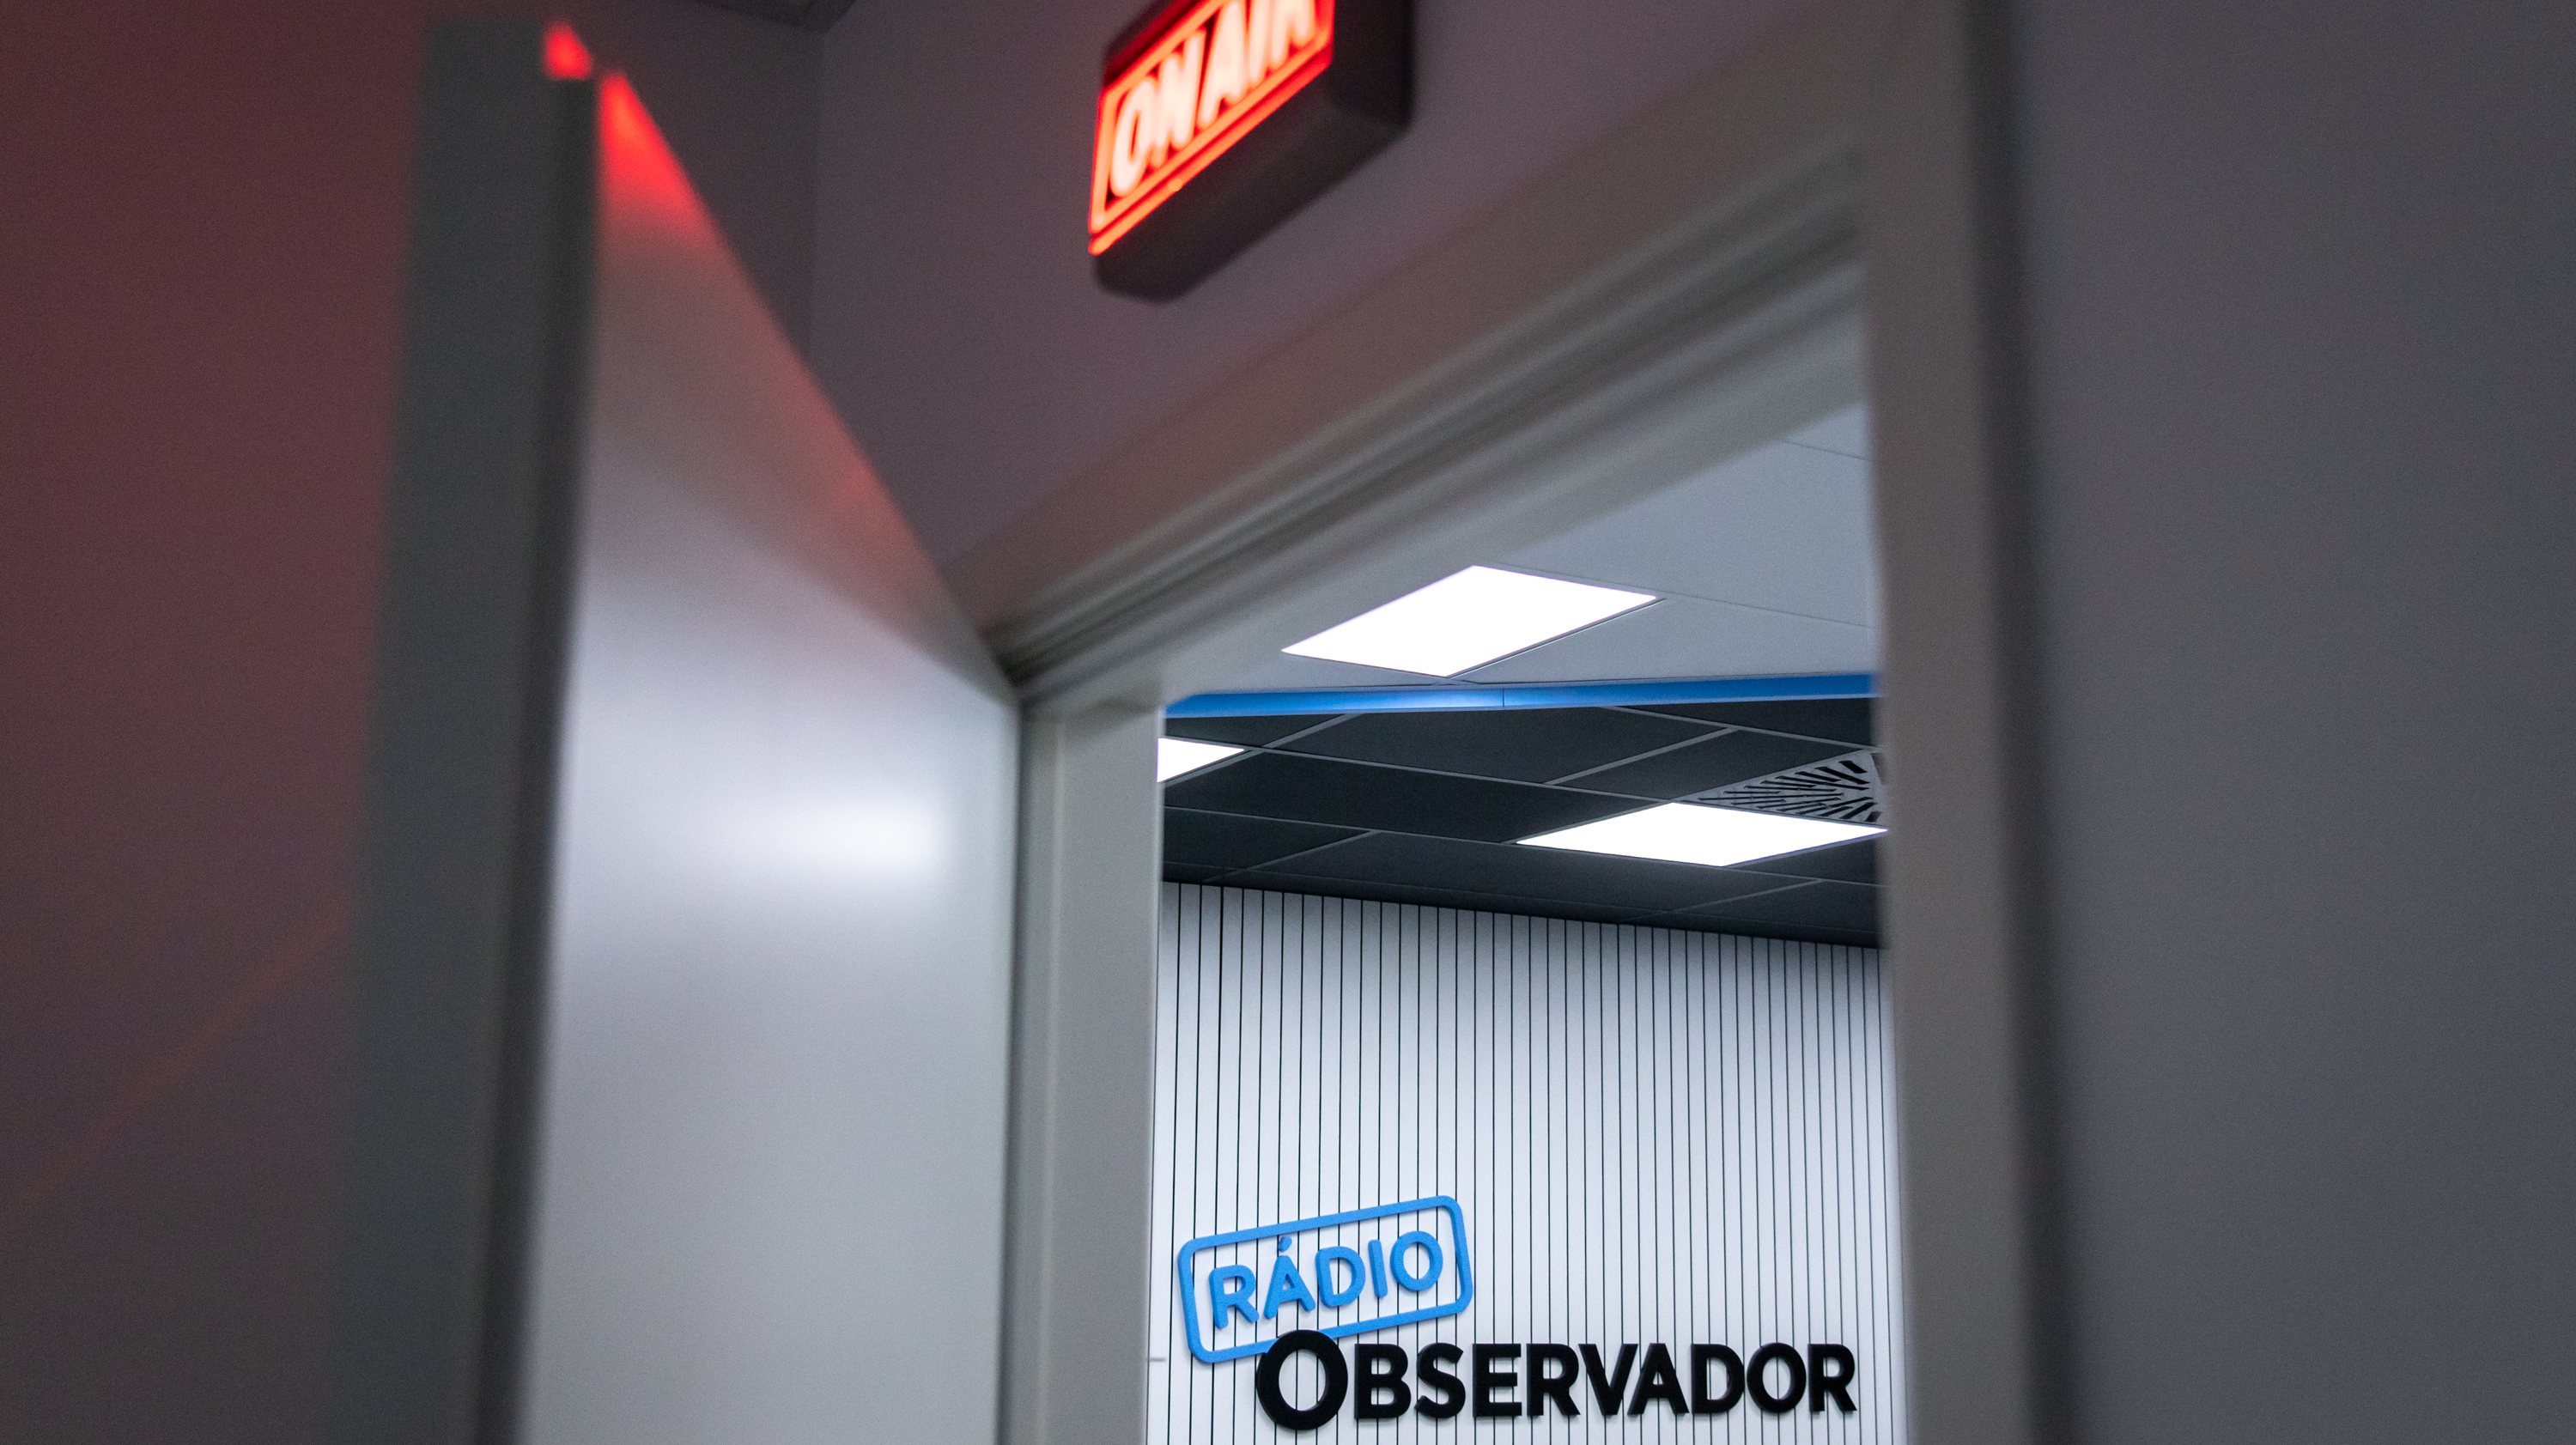 Novos estúdios da Rádio Observador em Alvalade. 5 de Novembro de 2021 TOMÁS SILVA/OBSERVADOR